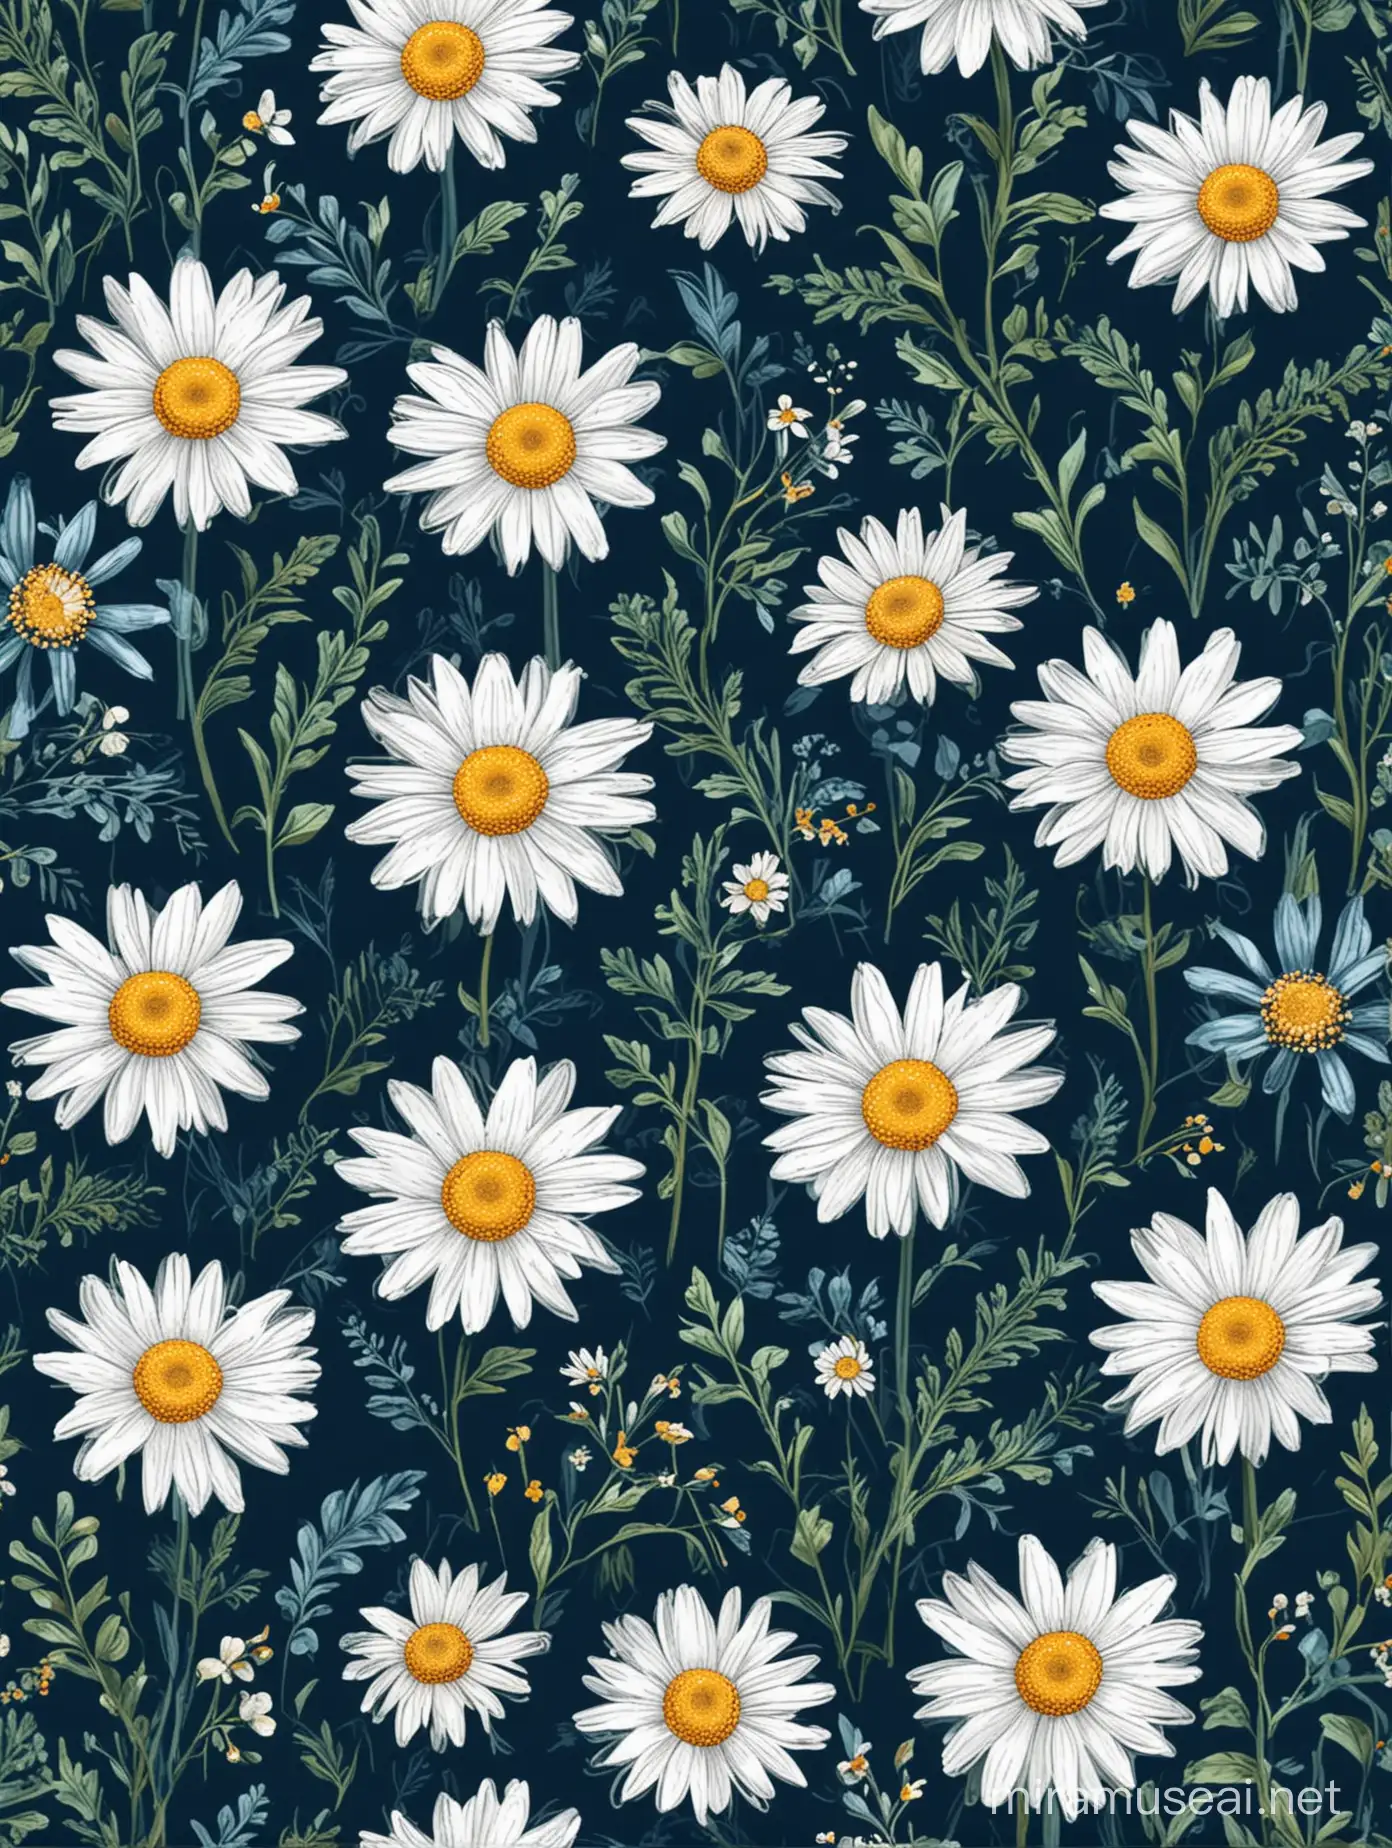 natural daisy blue wild 1 flower botanical seamless pattern vector illustration dark blue background